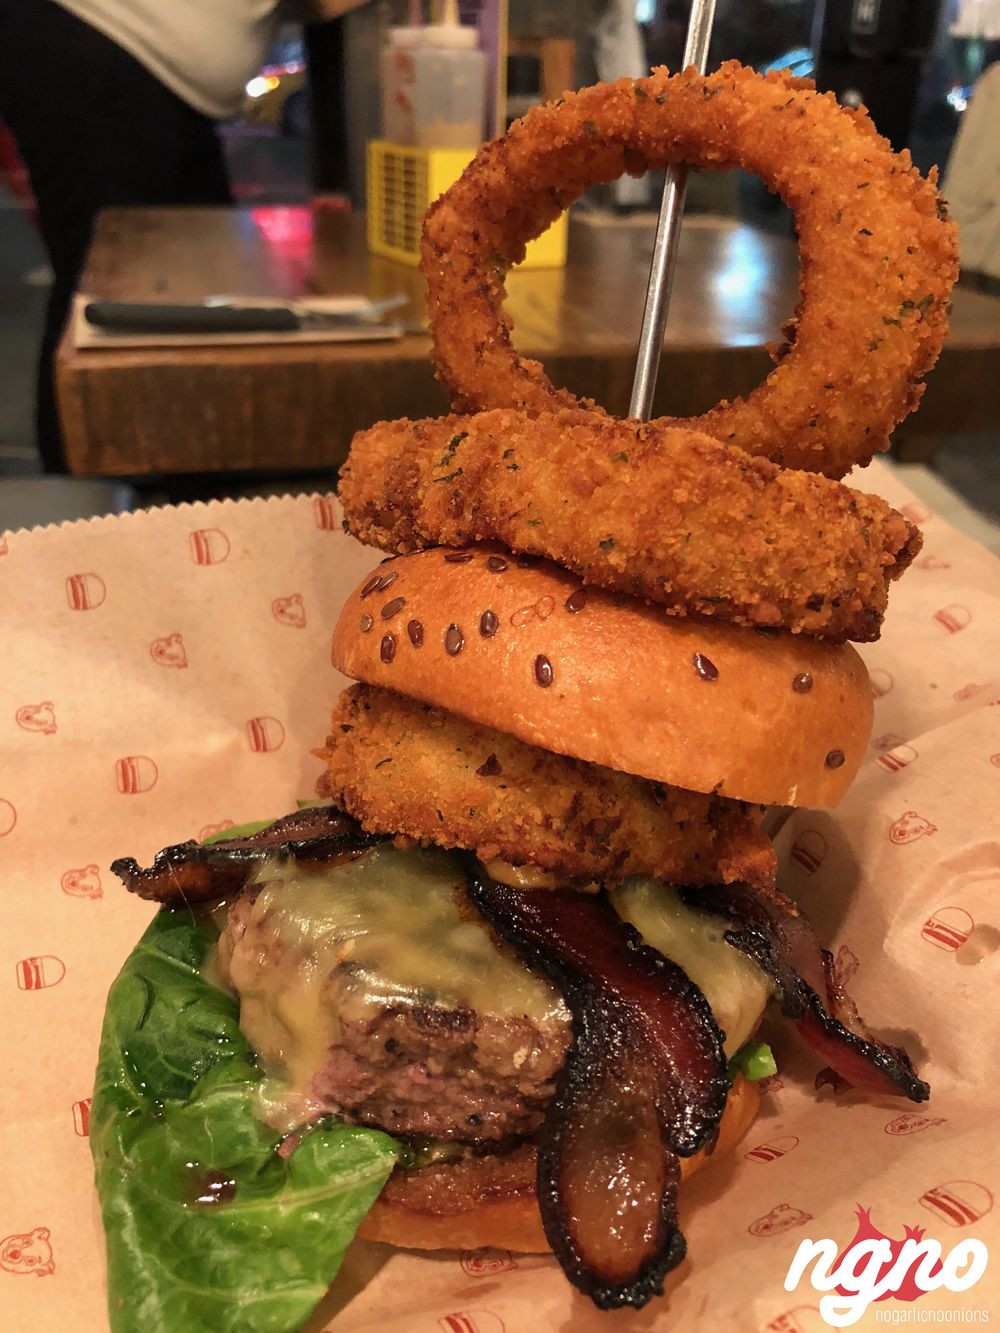 bareburger-burger-new-york212017-10-22-01-51-32